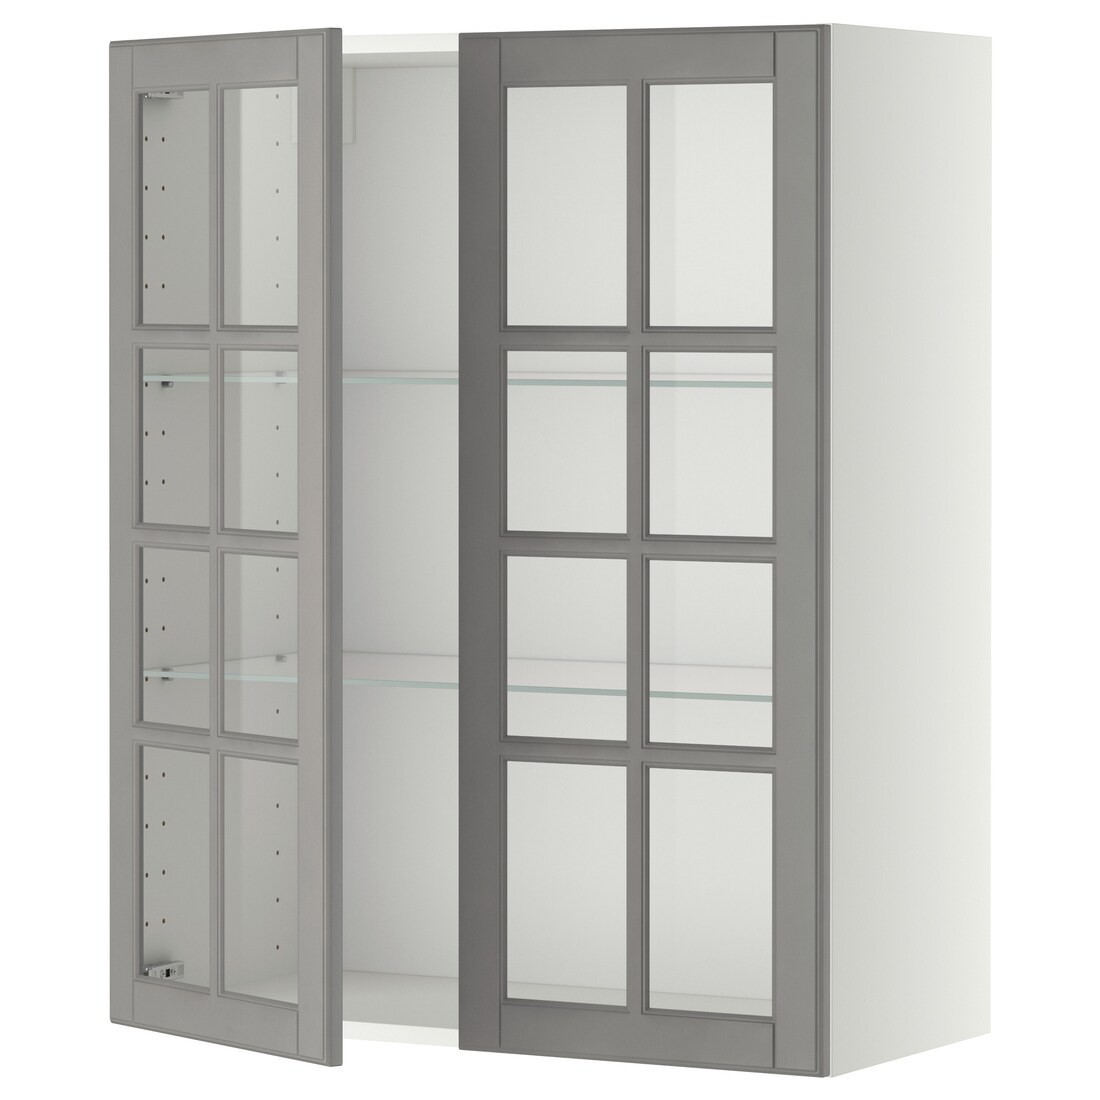 IKEA METOD МЕТОД Навесной шкаф, белый / Bodbyn серый, 80x100 см 09394960 | 093.949.60